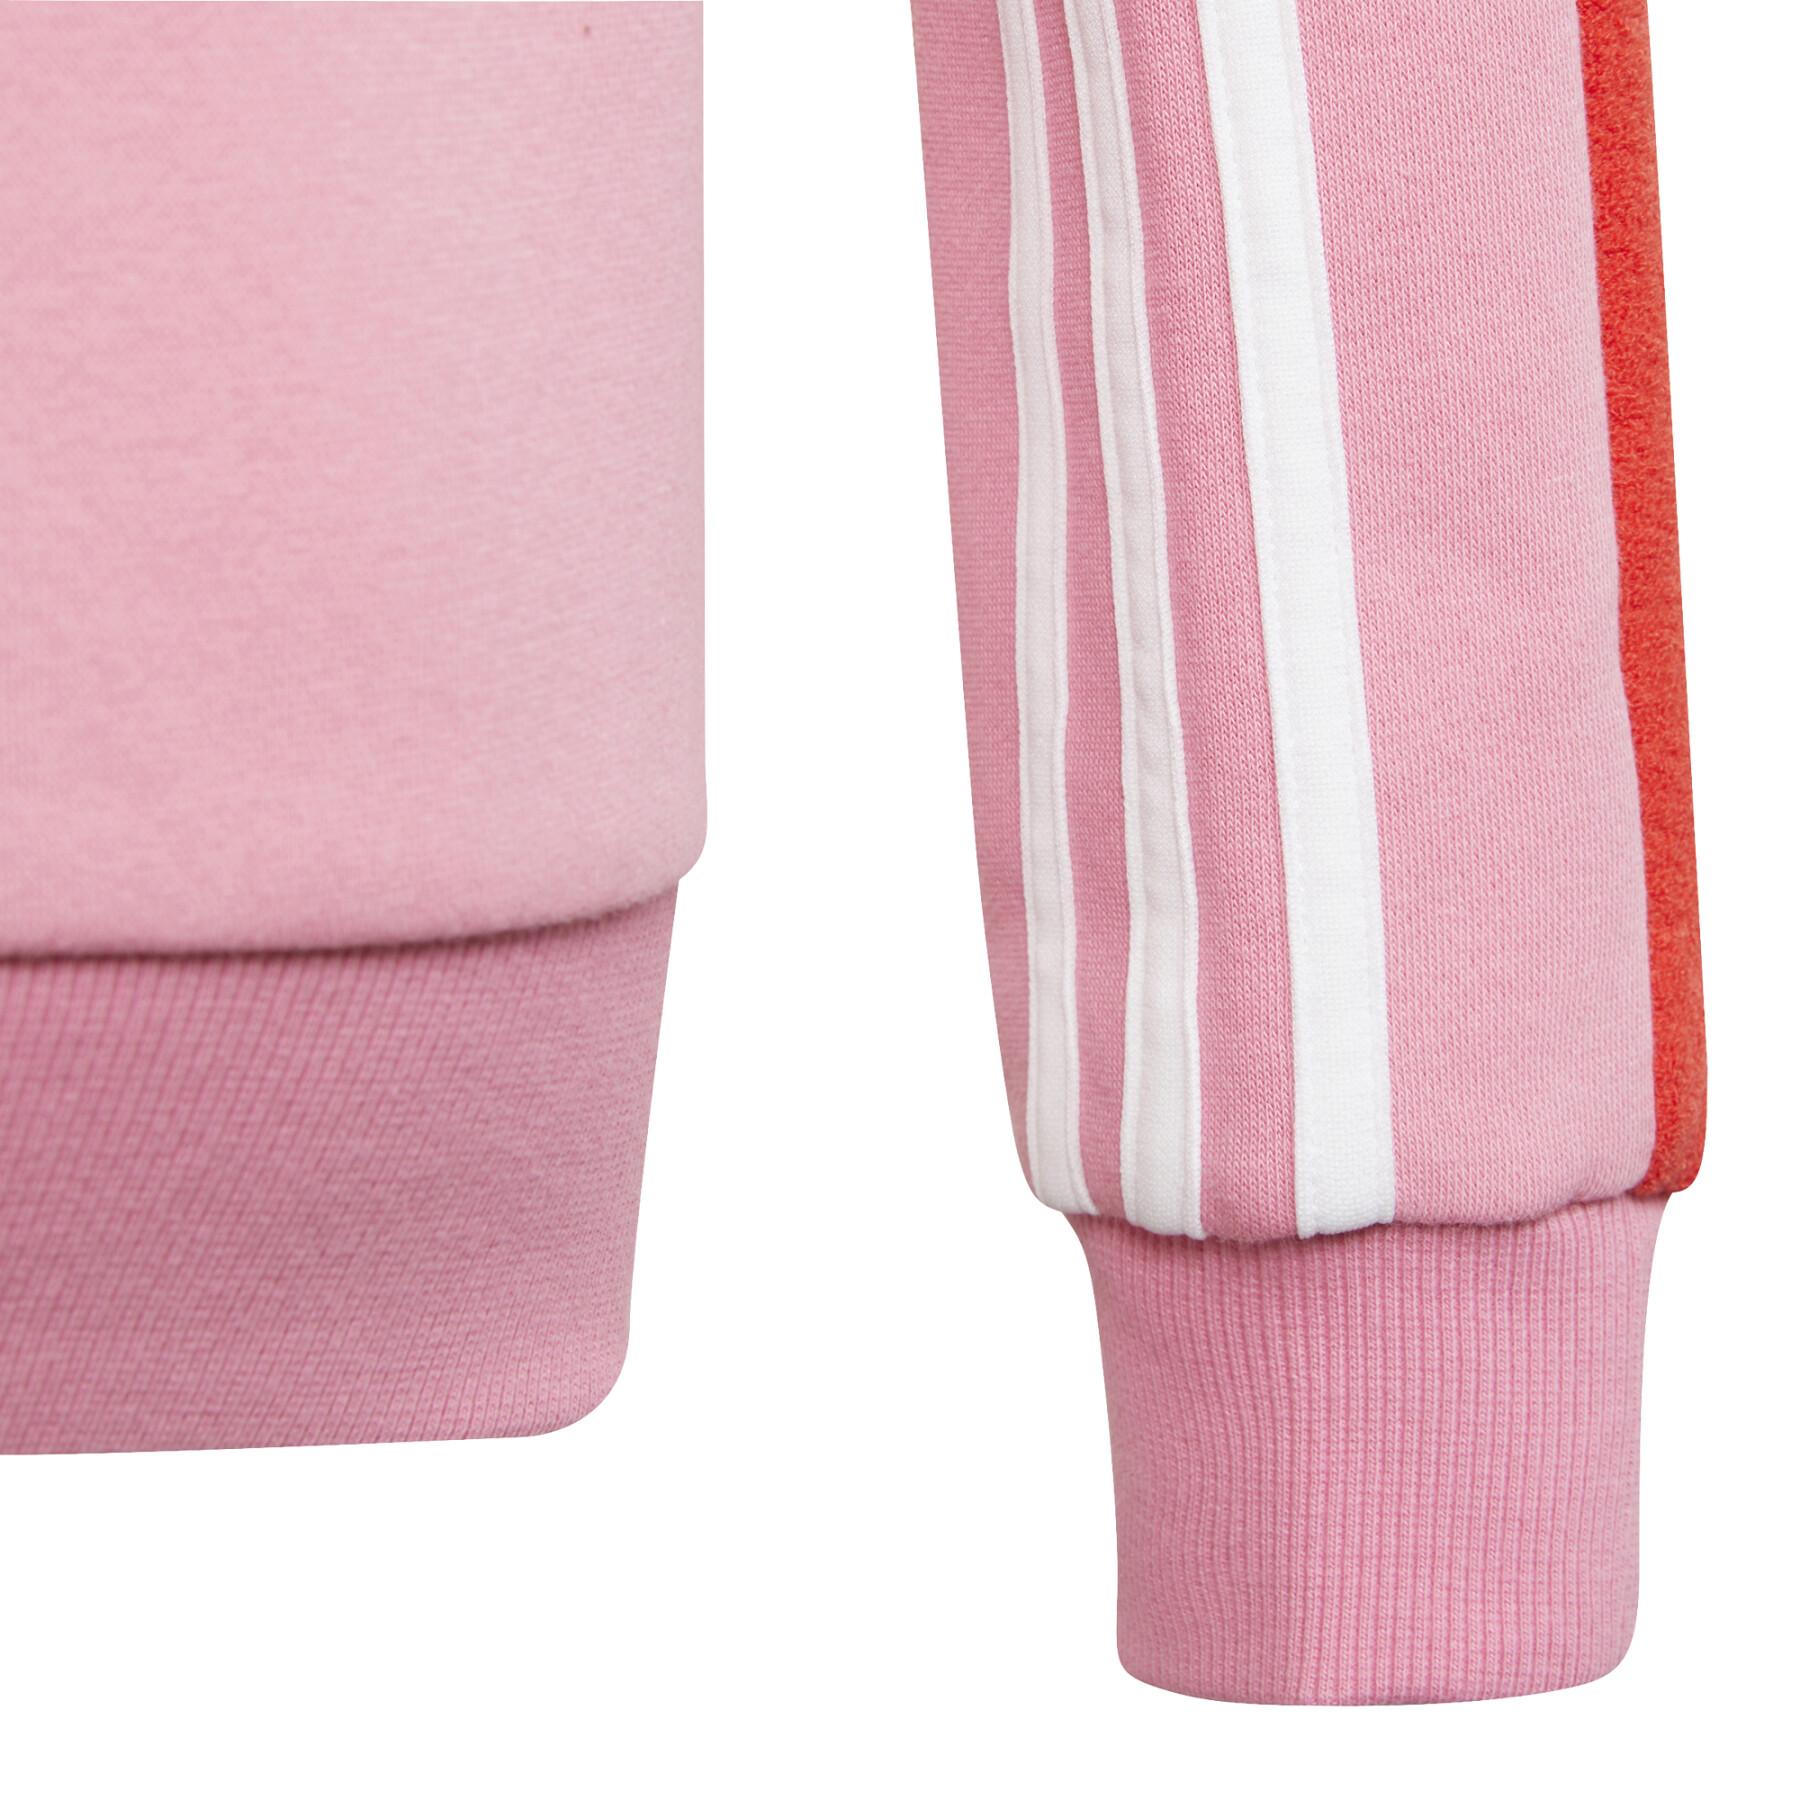 Sweatshirt à capuche fille adidas Colorblock Full-Zip